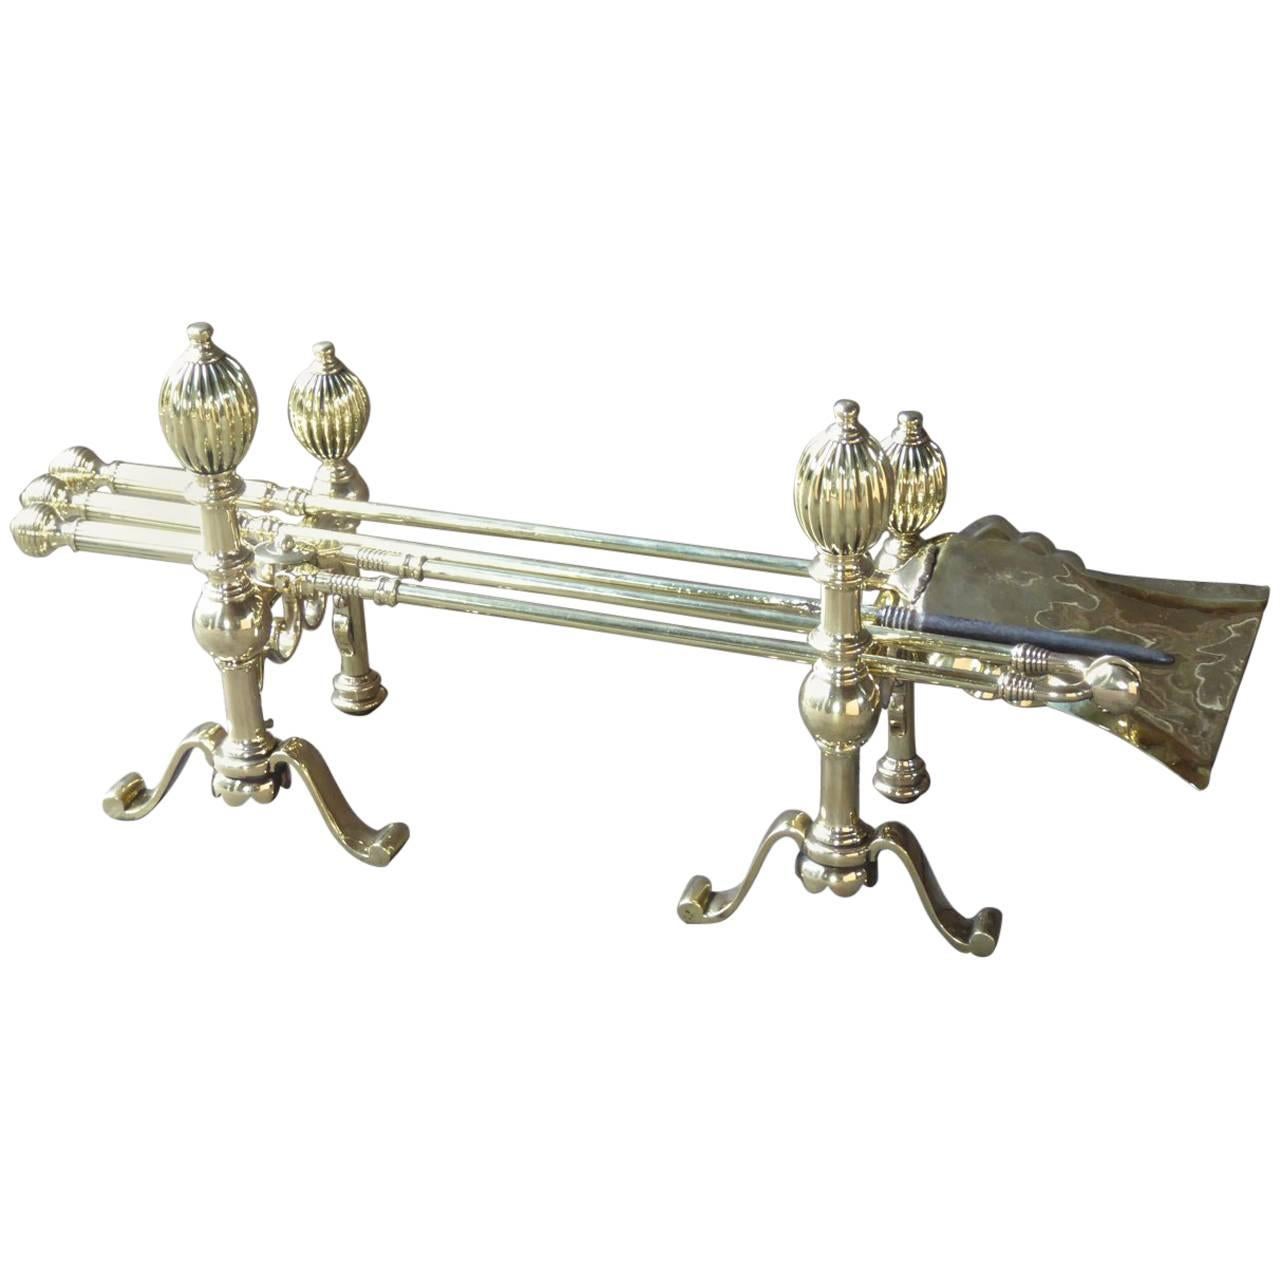 English Polished Brass Fireplace Tool Set, Companion Set